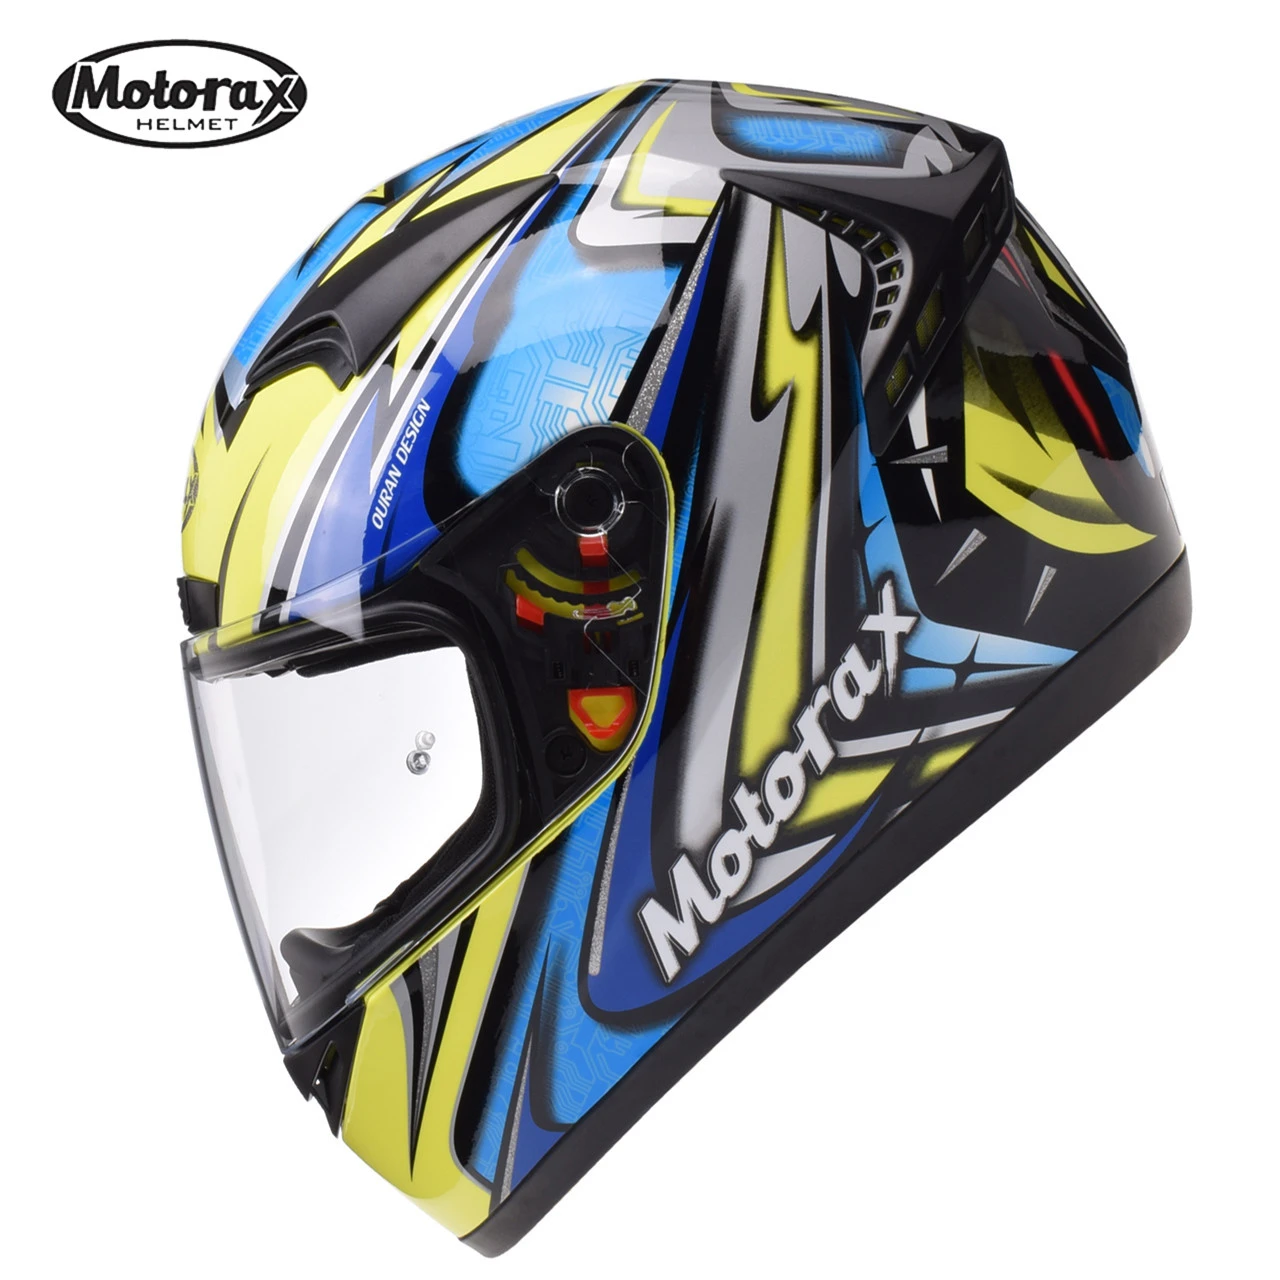 MOTORAX Motorcycle Helmet Full Face Racing Casco Capacete Casque Moto  Helmets Kask Helm Crash For Suzuki Motocyklowy Motorsiklet|Helmets| -  AliExpress